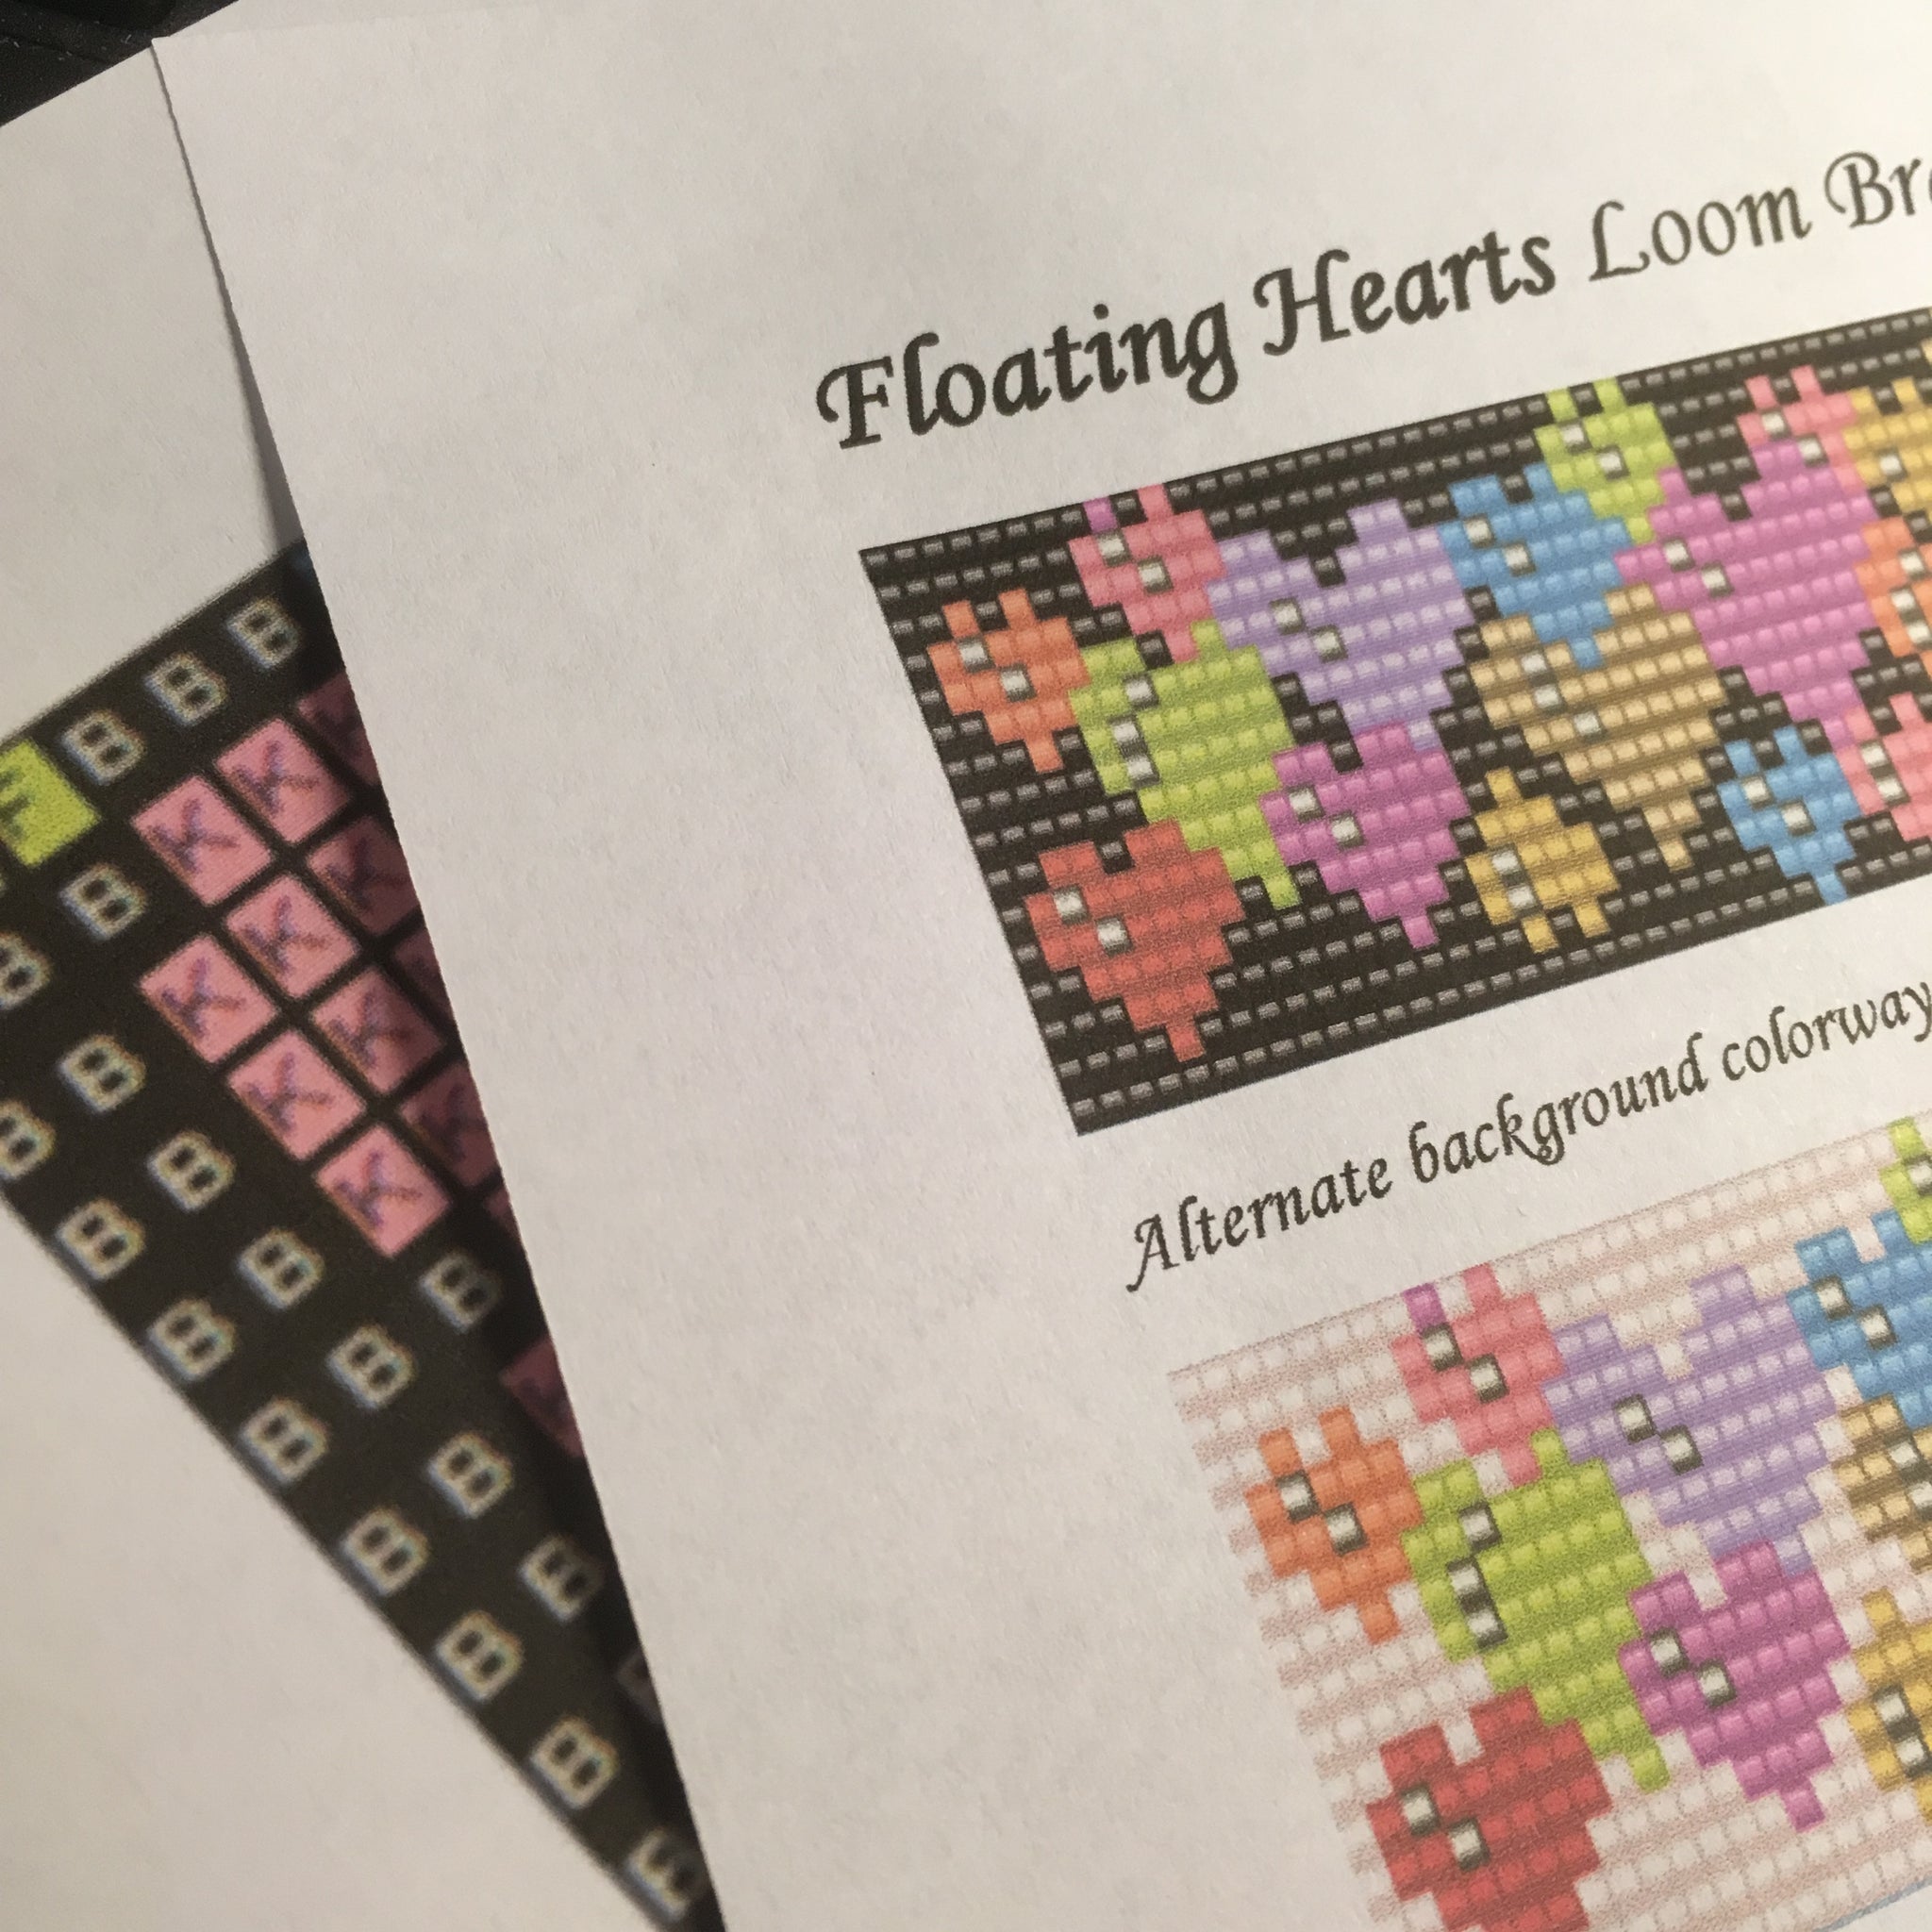 Floating Hearts Bead Loom Bracelet Pattern PDF by Susan Pelligra 